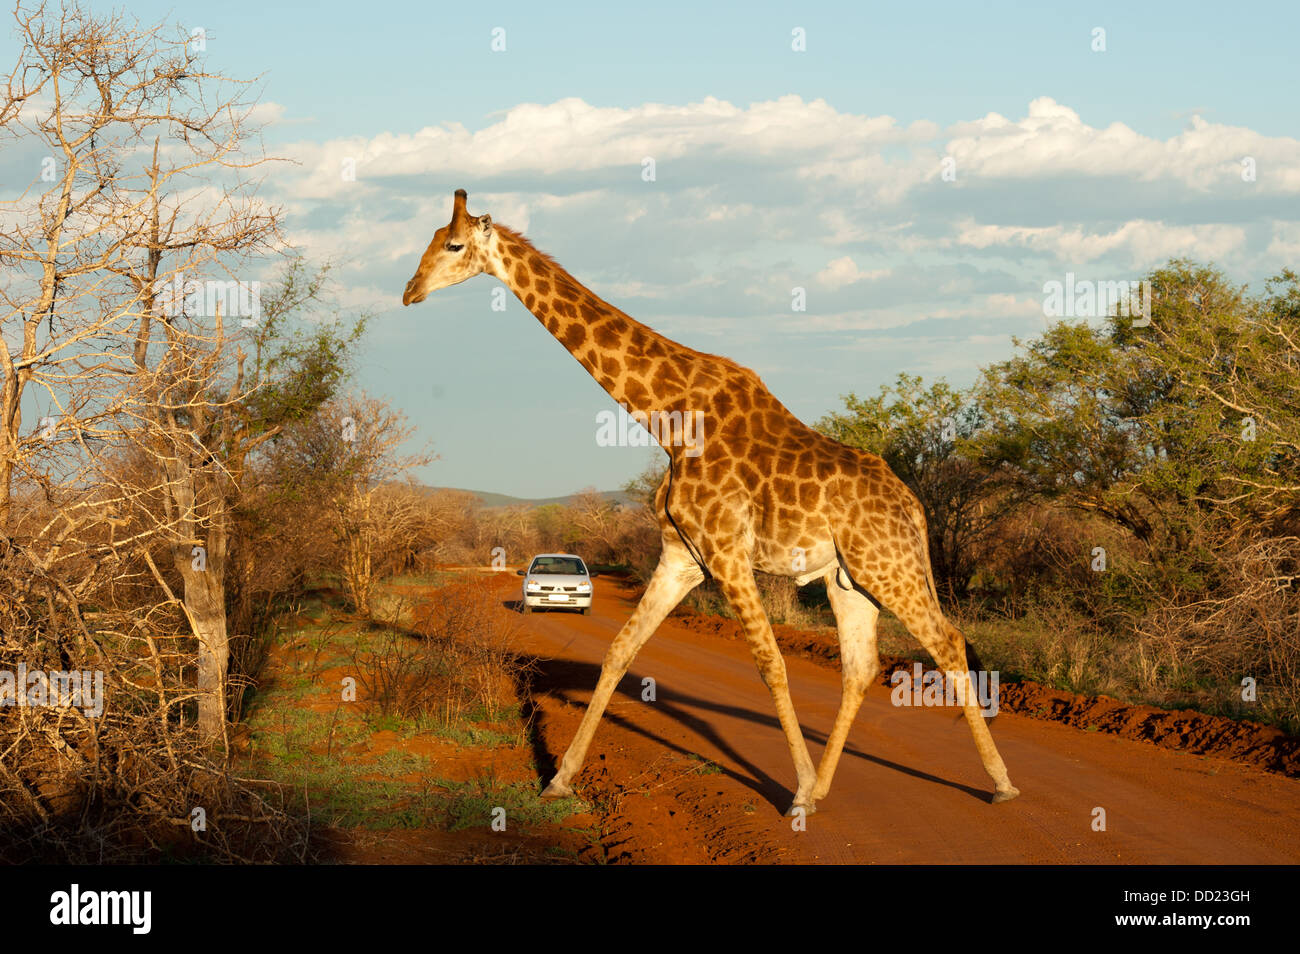 Le sud du passage de girafe, un chemin de terre (Giraffa camelopardalis giraffa), Madikwe Game Reserve, Afrique du Sud Banque D'Images